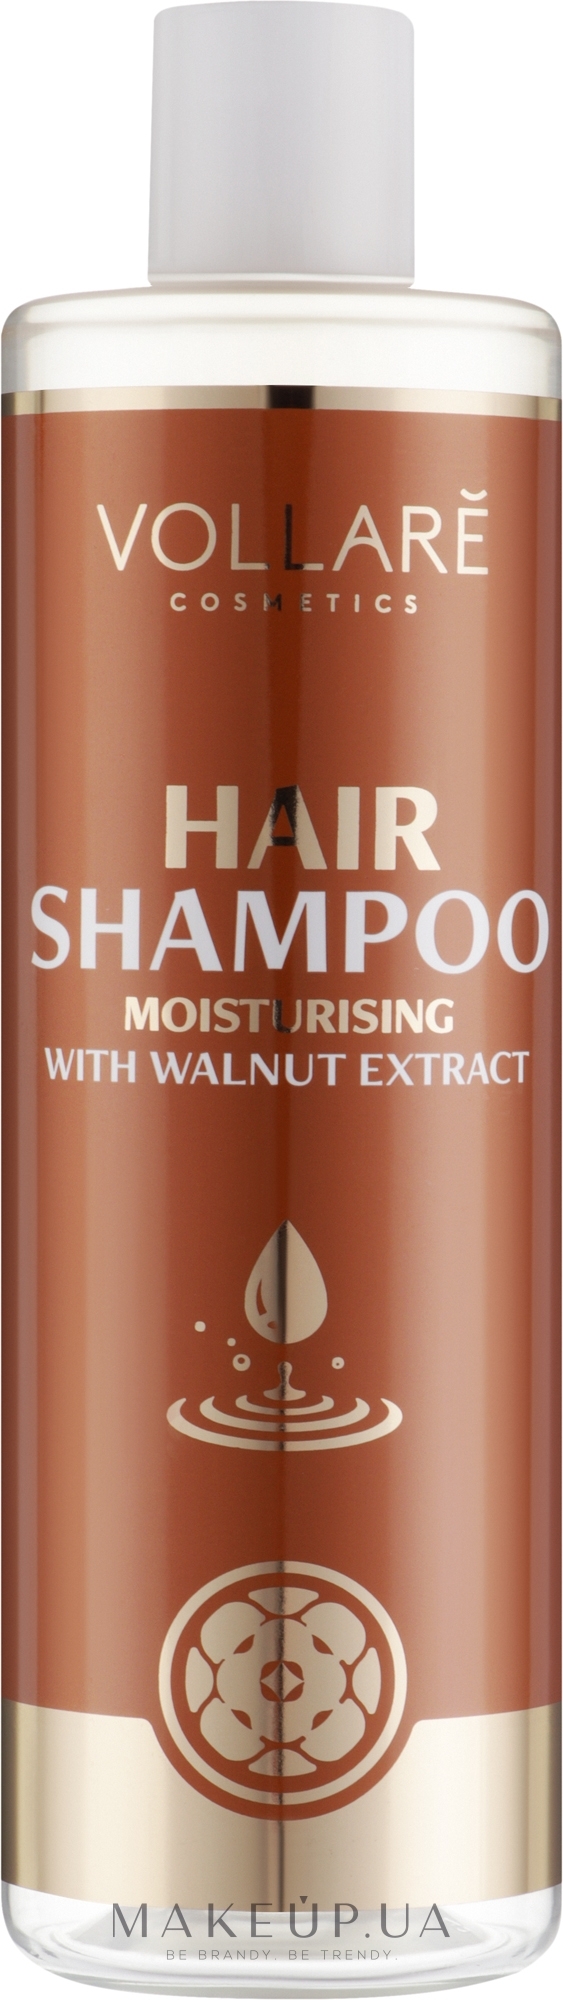 Зволожувальний шампунь для волосся з екстрактом волоського горіха - Vollare Cosmetics Hair Shampoo Moisturising With Walnut Extract — фото 400ml